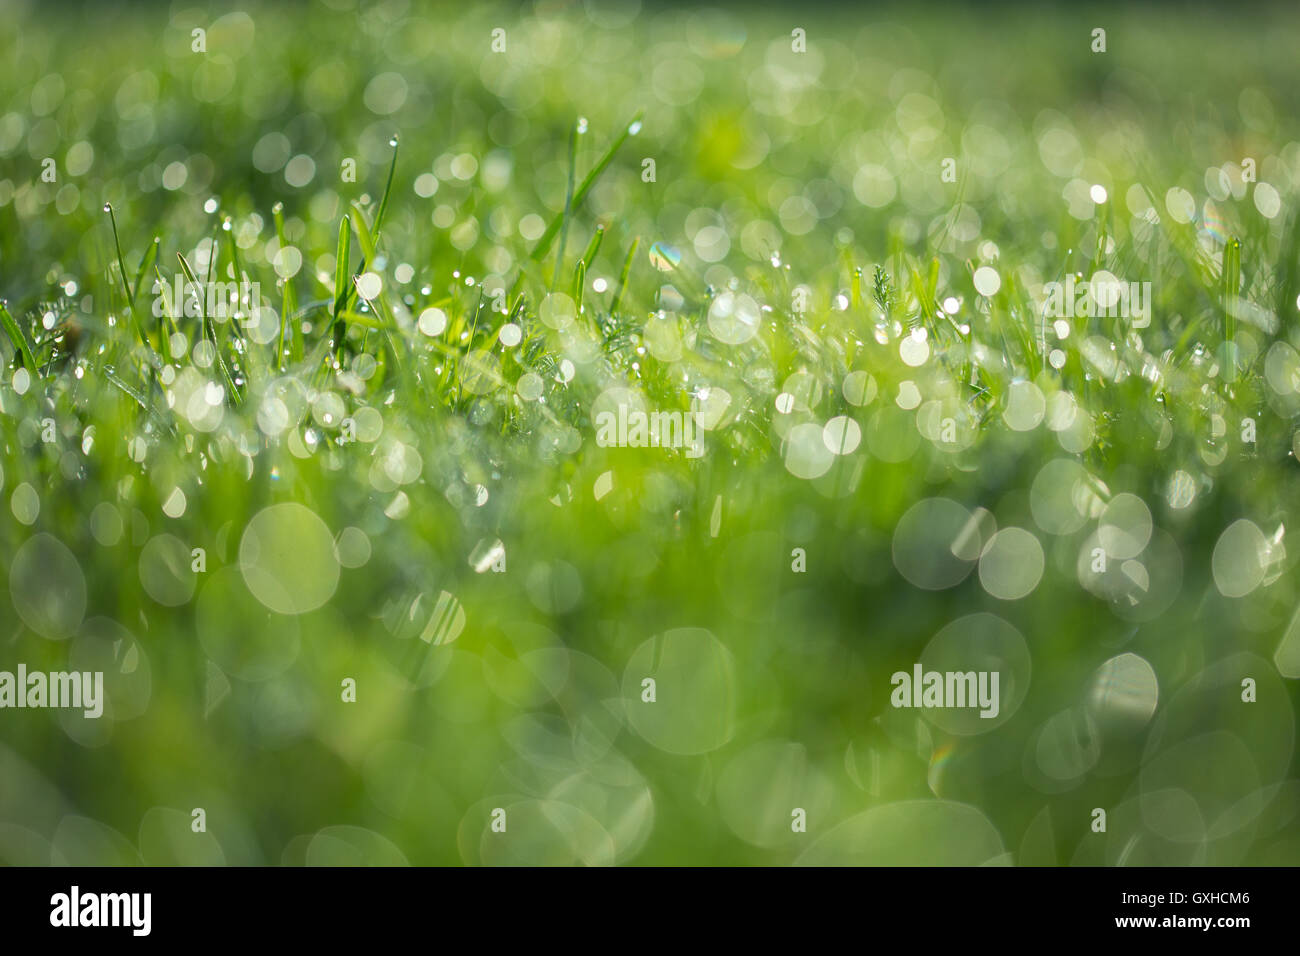 Nassen grünen Rasen mit Tau Rasen backround Stockfoto